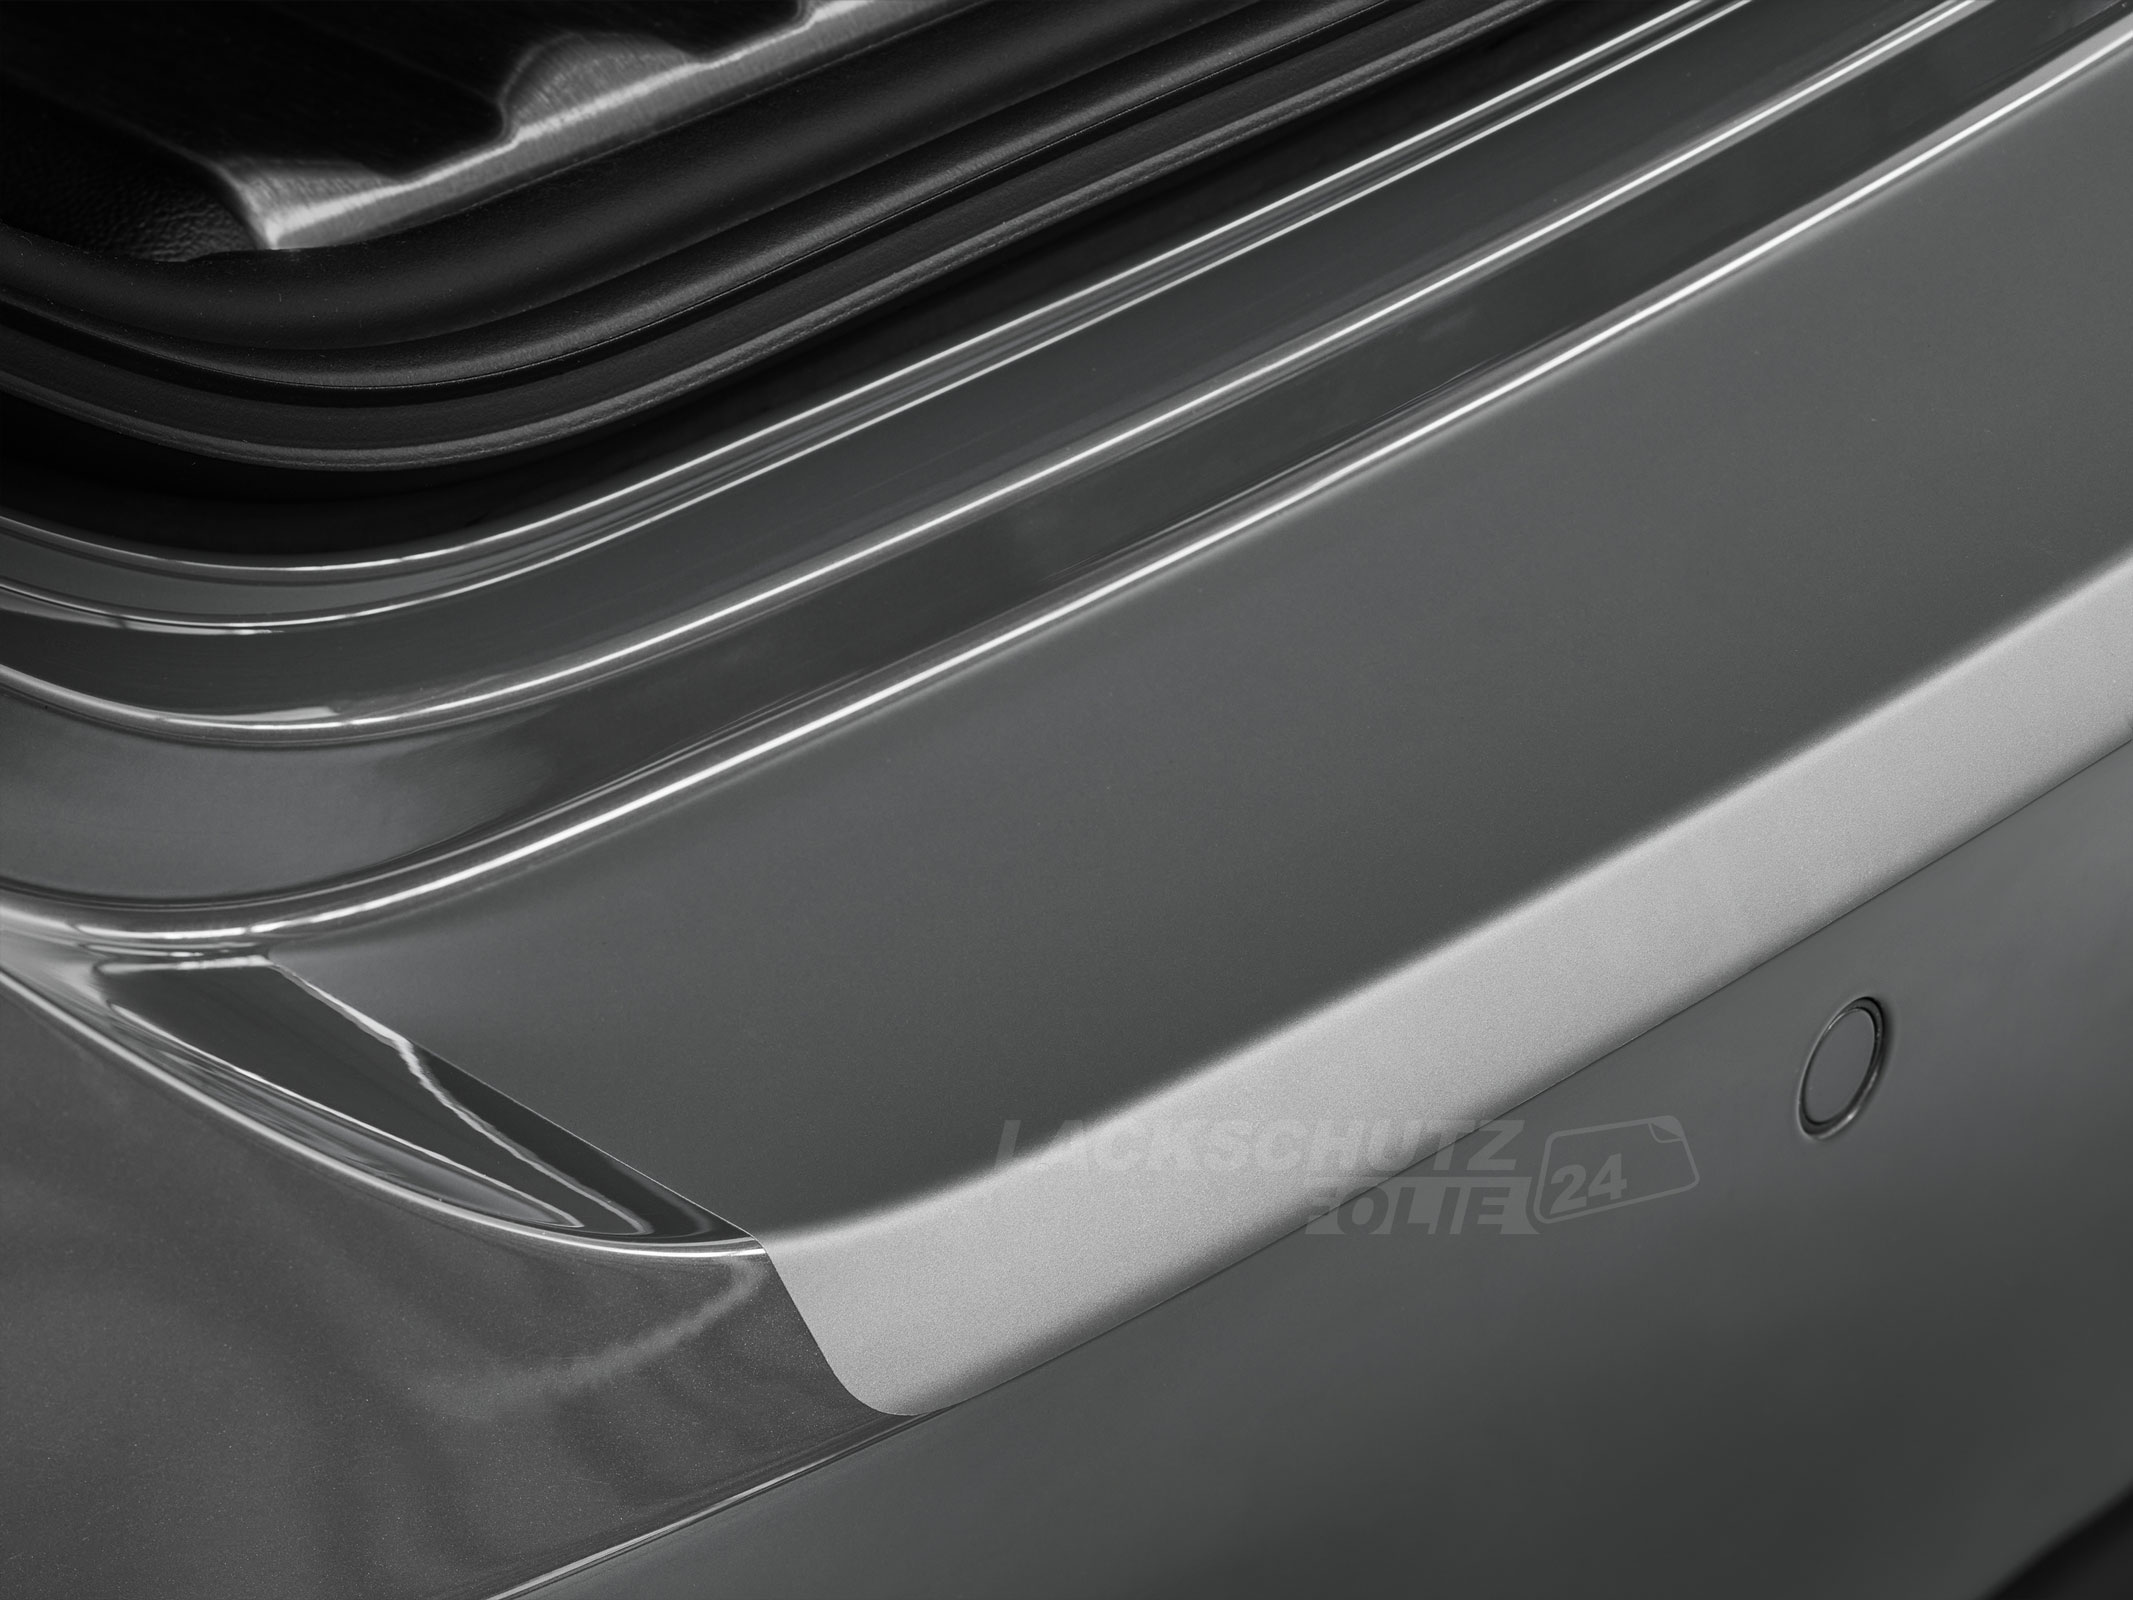 Ladekantenschutzfolie - Transparent Glatt MATT 110 µm stark  für Hyundai Grand Santa Fe Typ DM, BJ 2013-2018